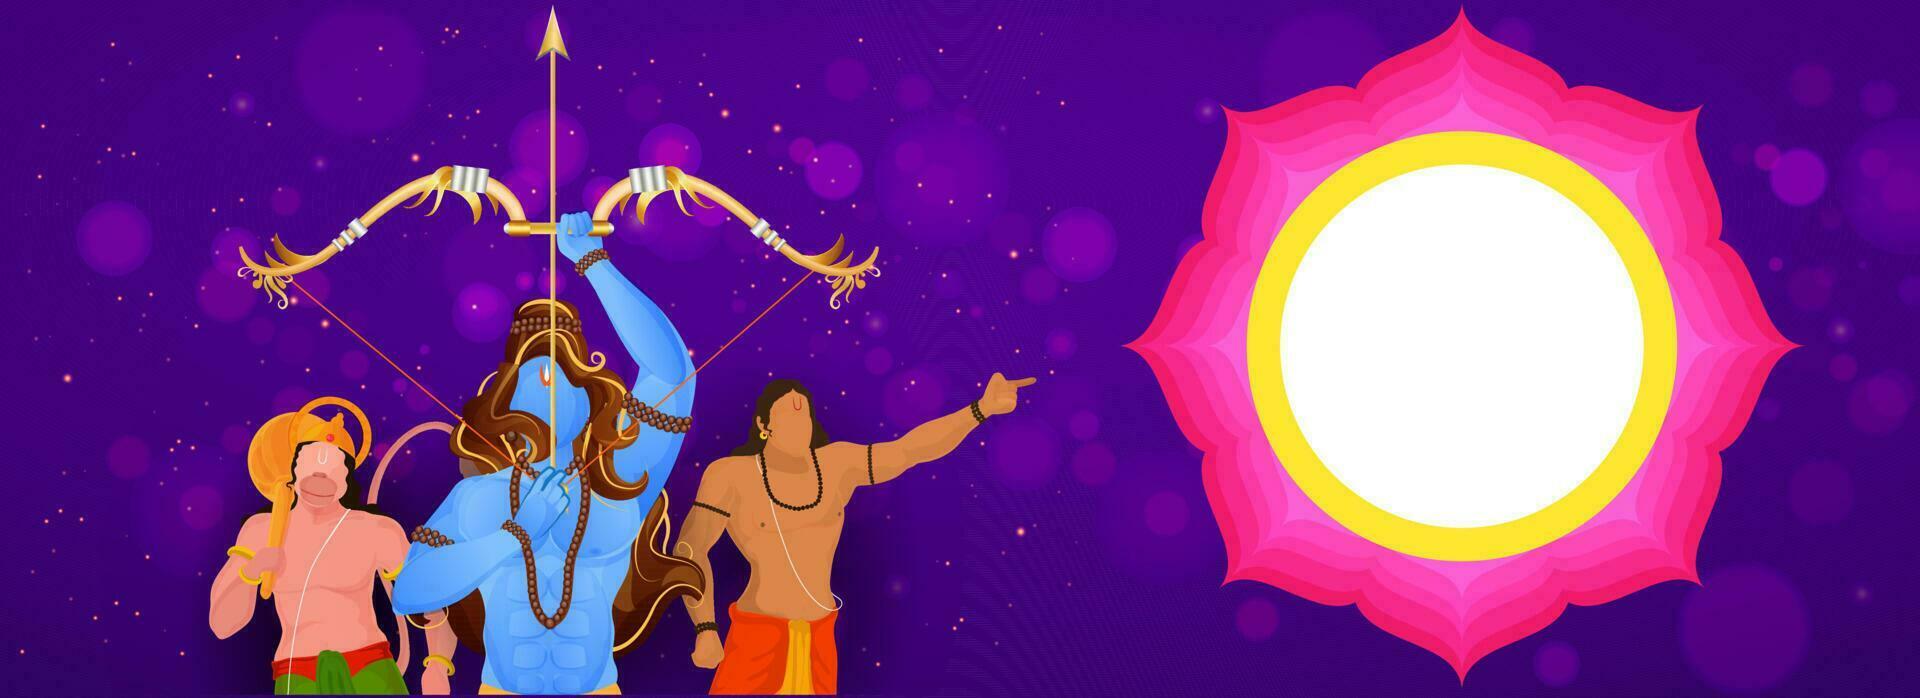 Hindu Mythology Lord Rama Taking An Aim With Hanuman, Lakshman Character And Empty Mandala Frame On Purple Bokeh Background. vector